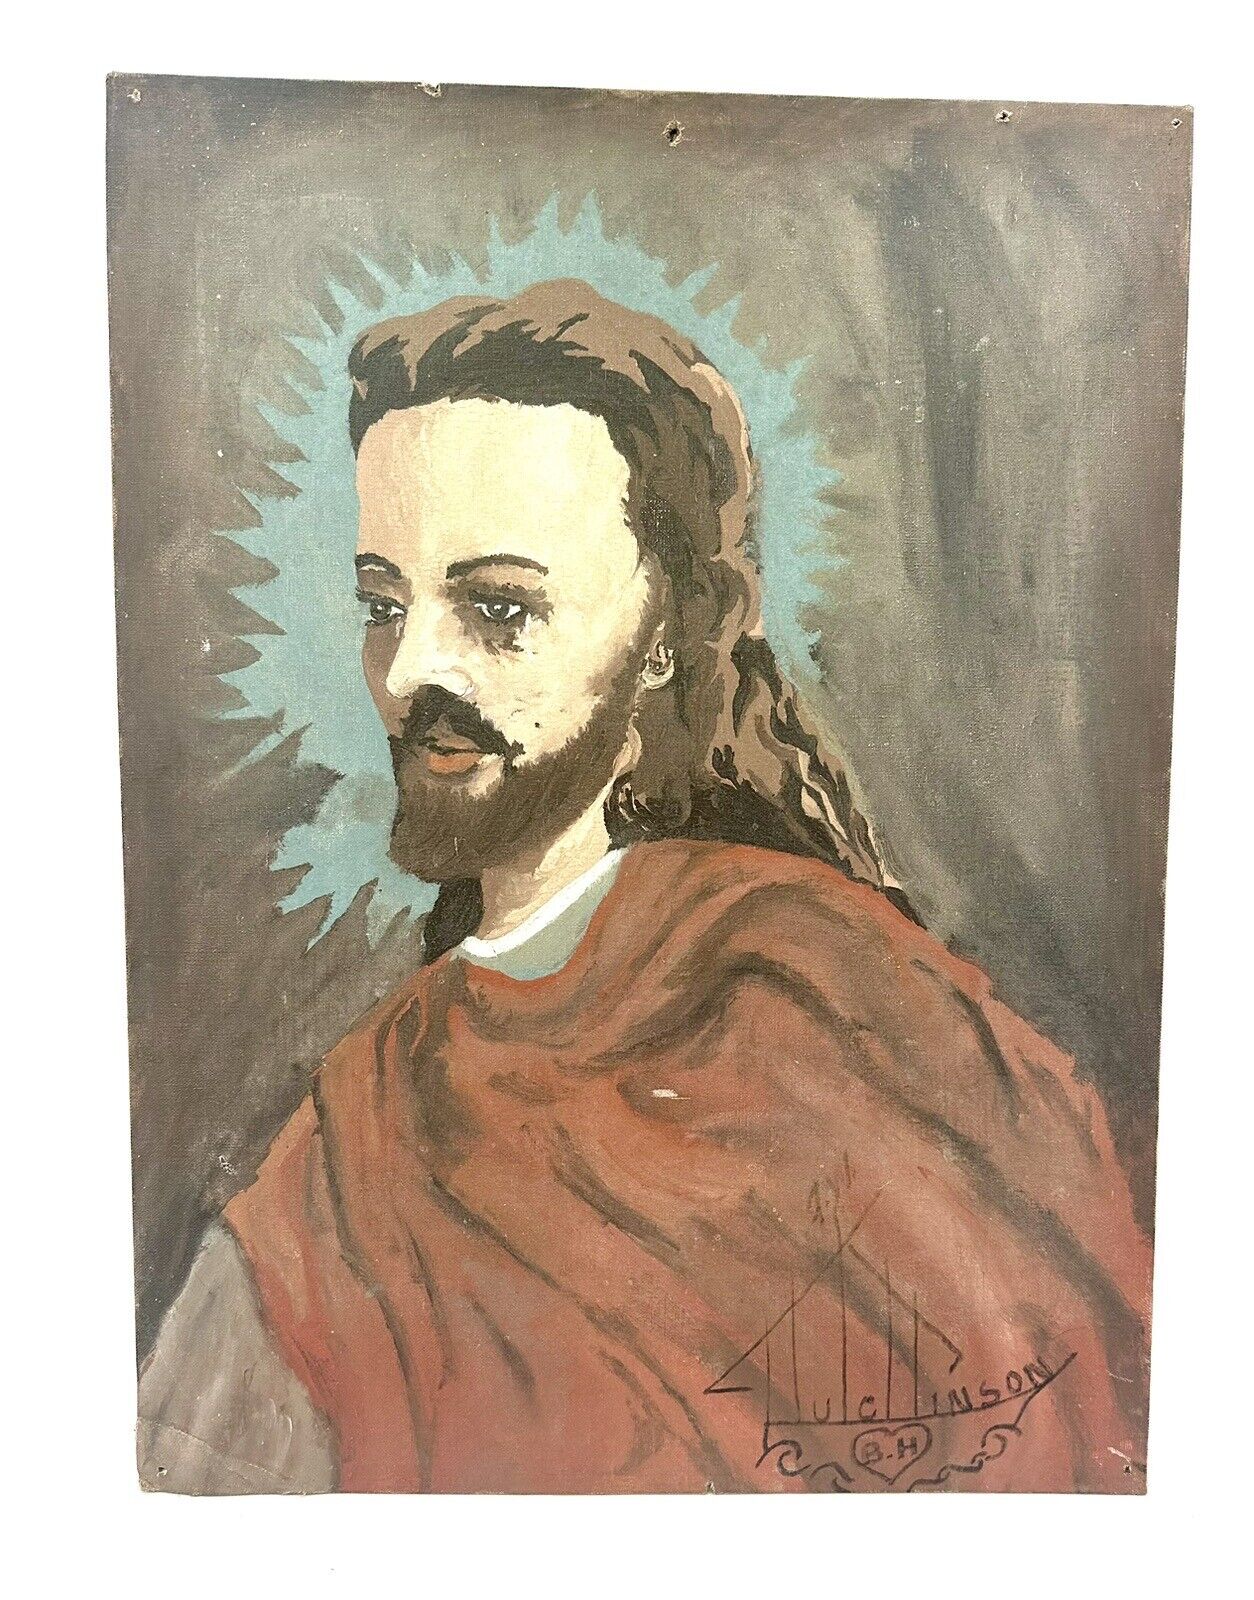 VINTAGE LORD JESUS CHRIST UNFRAMED PORTRAIT PAINTING 1960s FOLK ART SIGNED 18x24